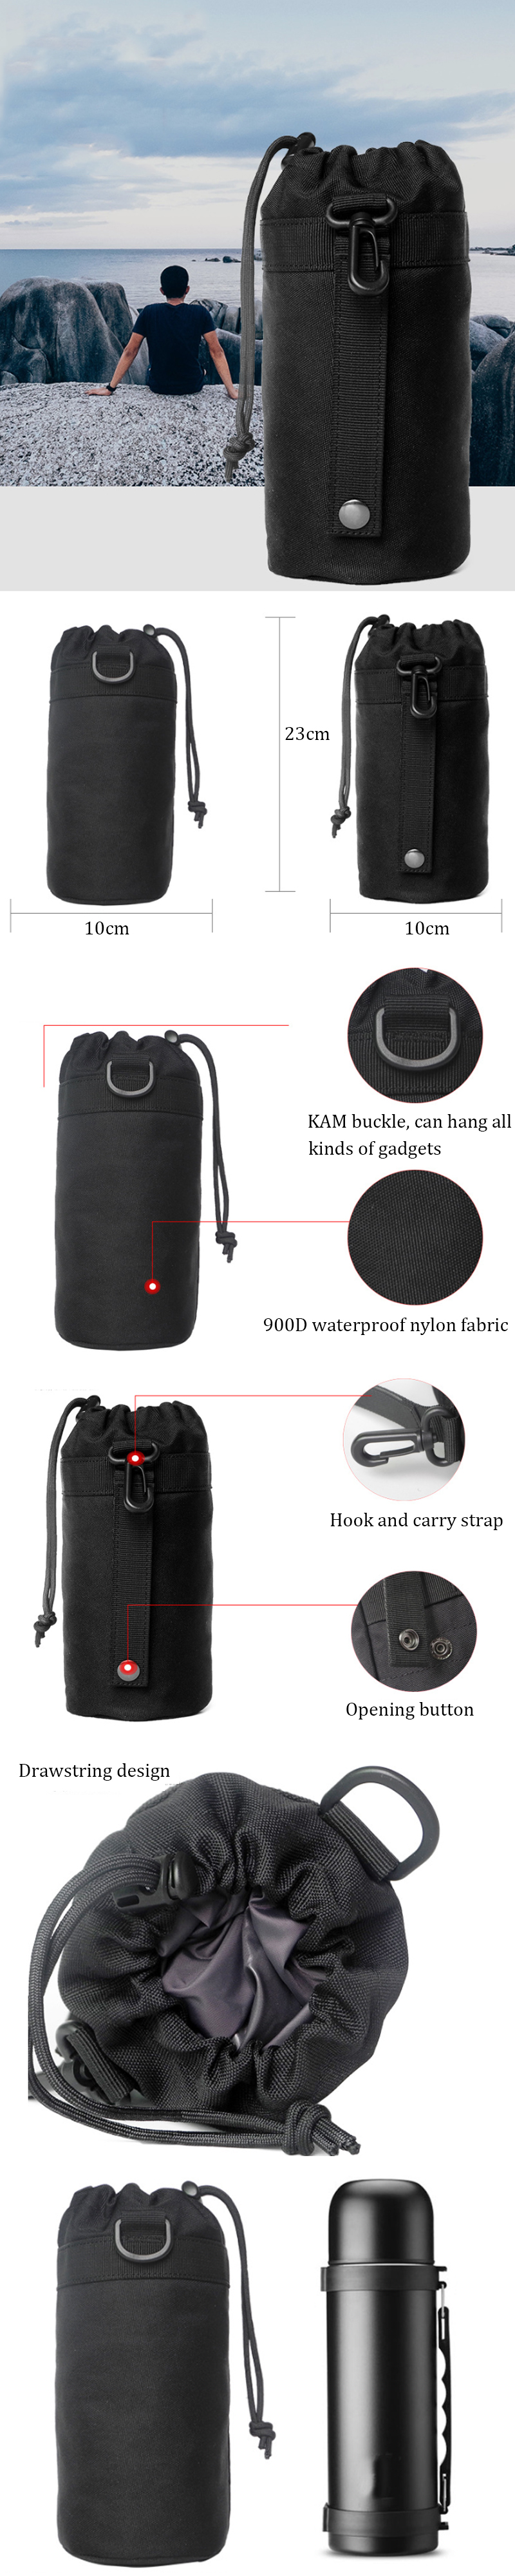 900D-Nylon-Water-Bottle-Bag-Tactical-Military-Kettle-Bag-Camping-Hiking-Portable-Drawstring-Bag-1404866